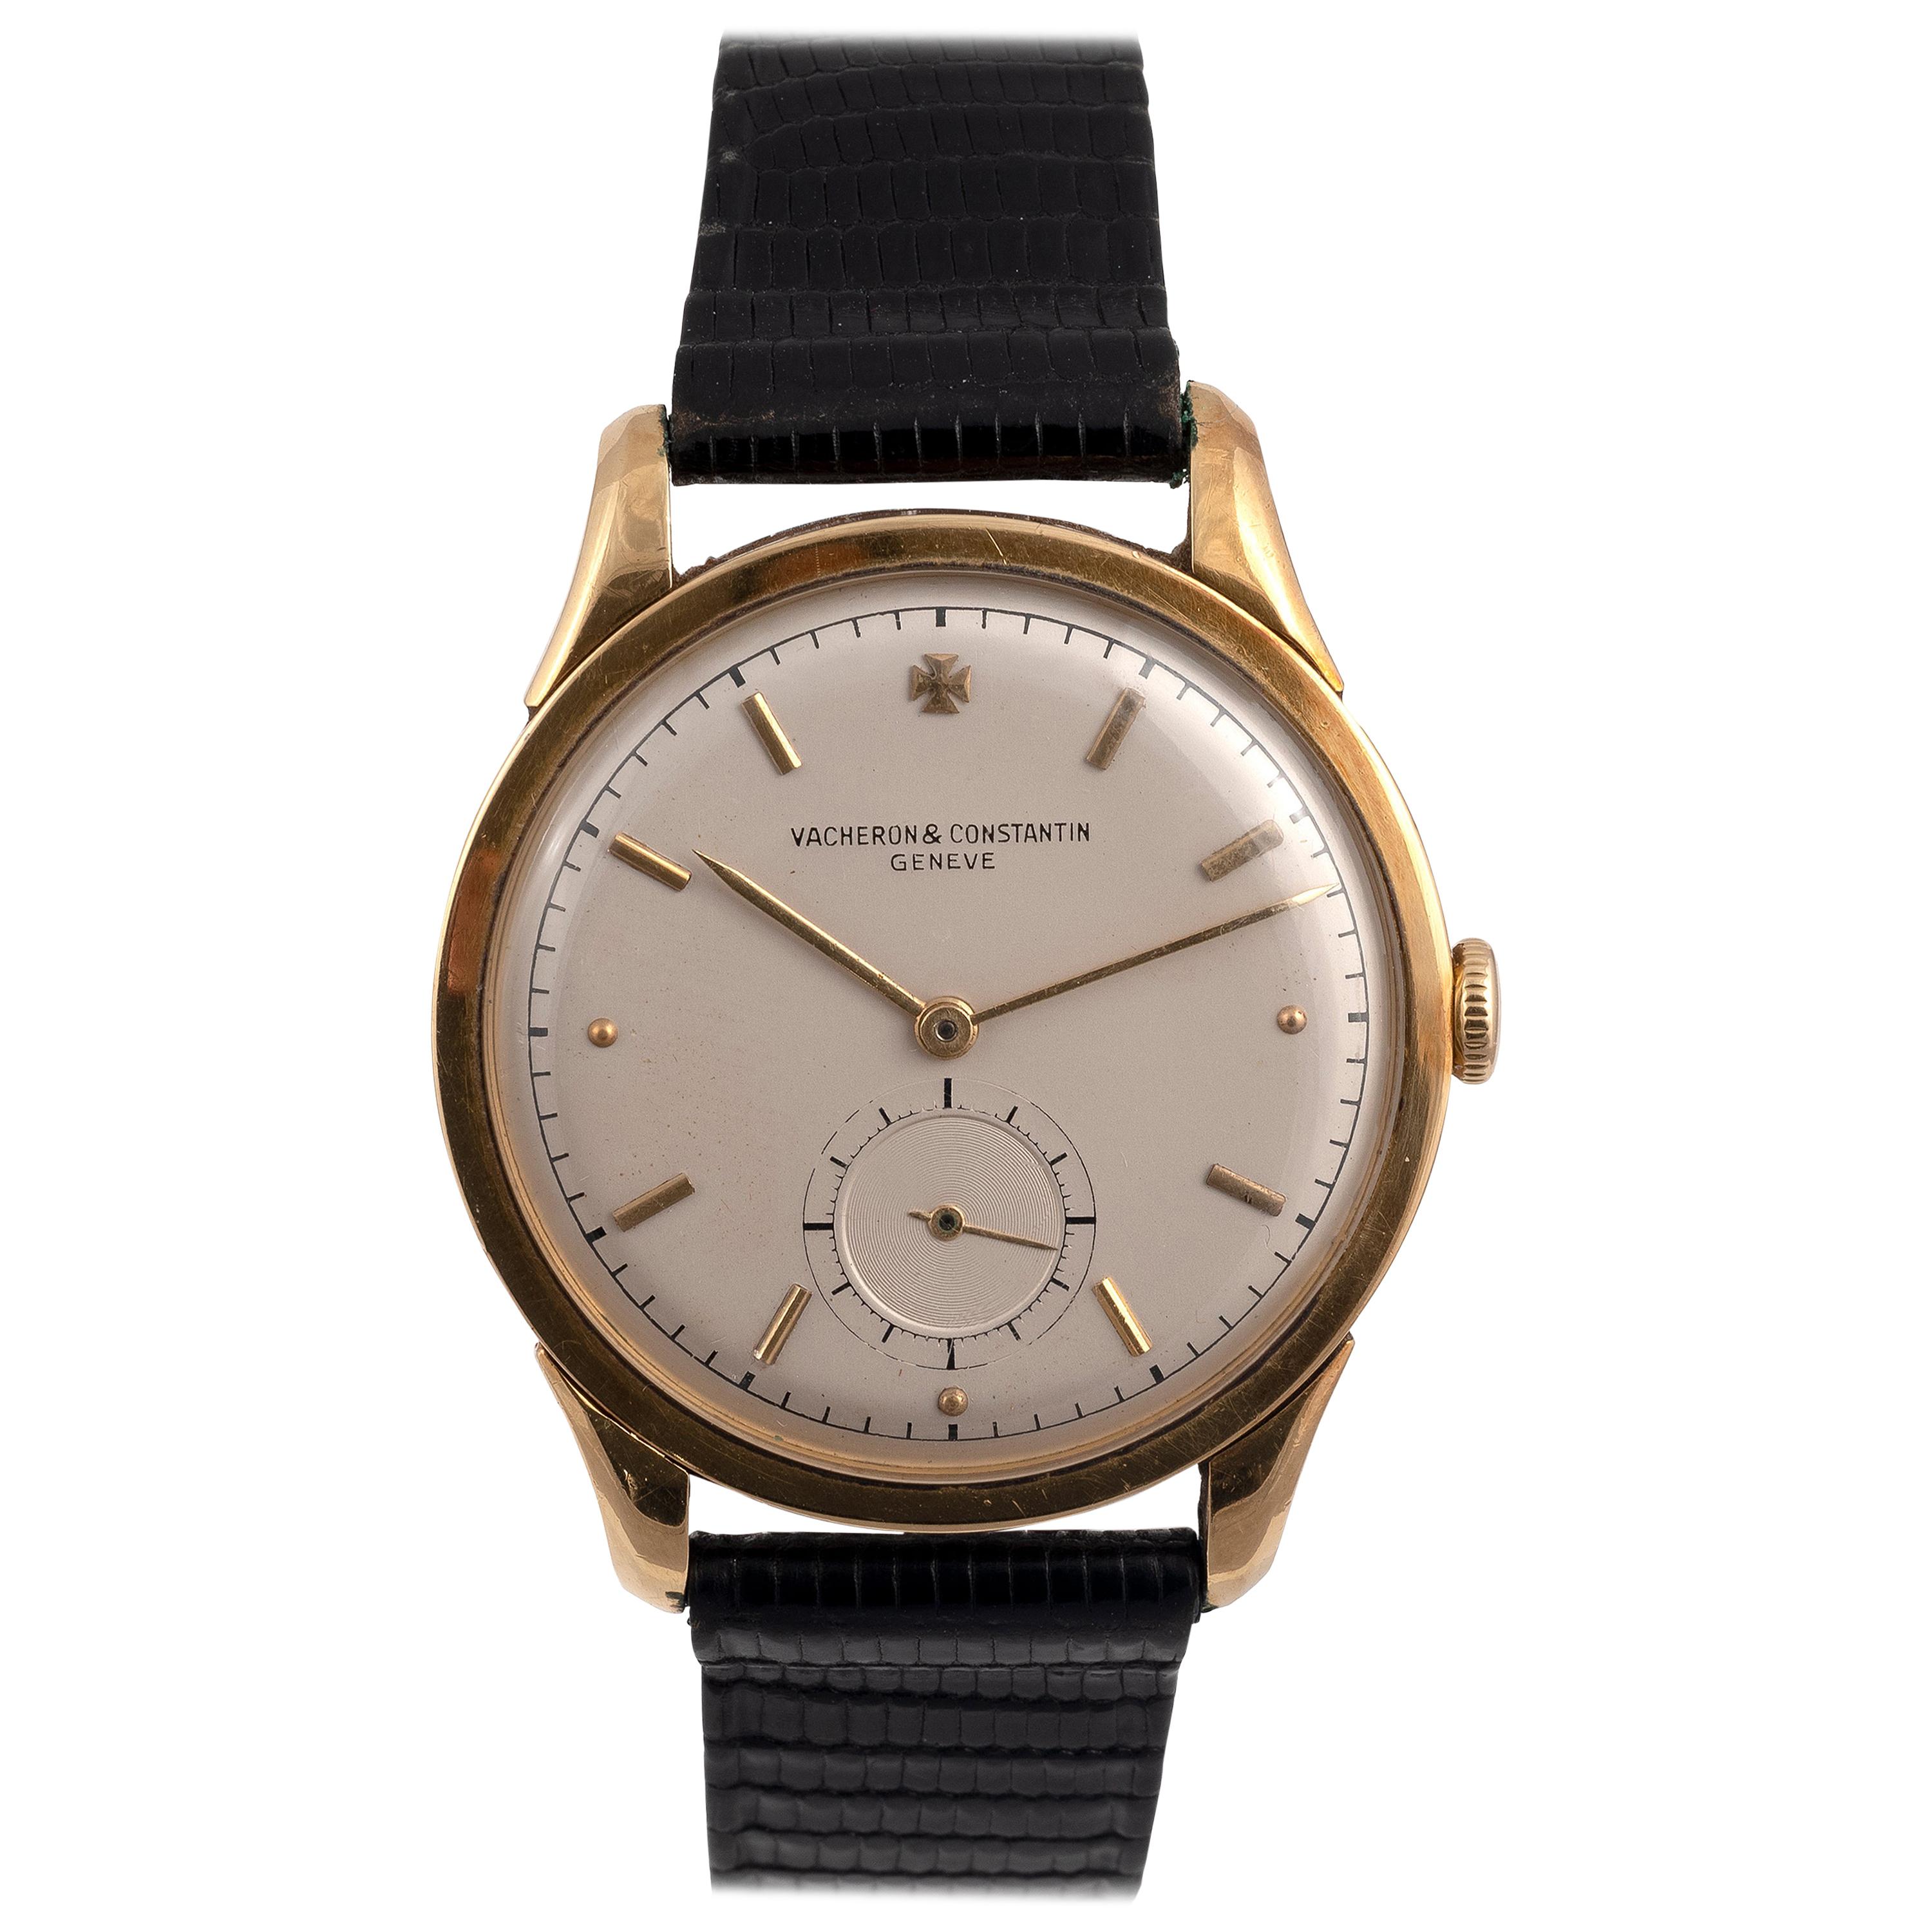 Vacheron & Constantin 18 Karat Yellow Gold Wristwatch